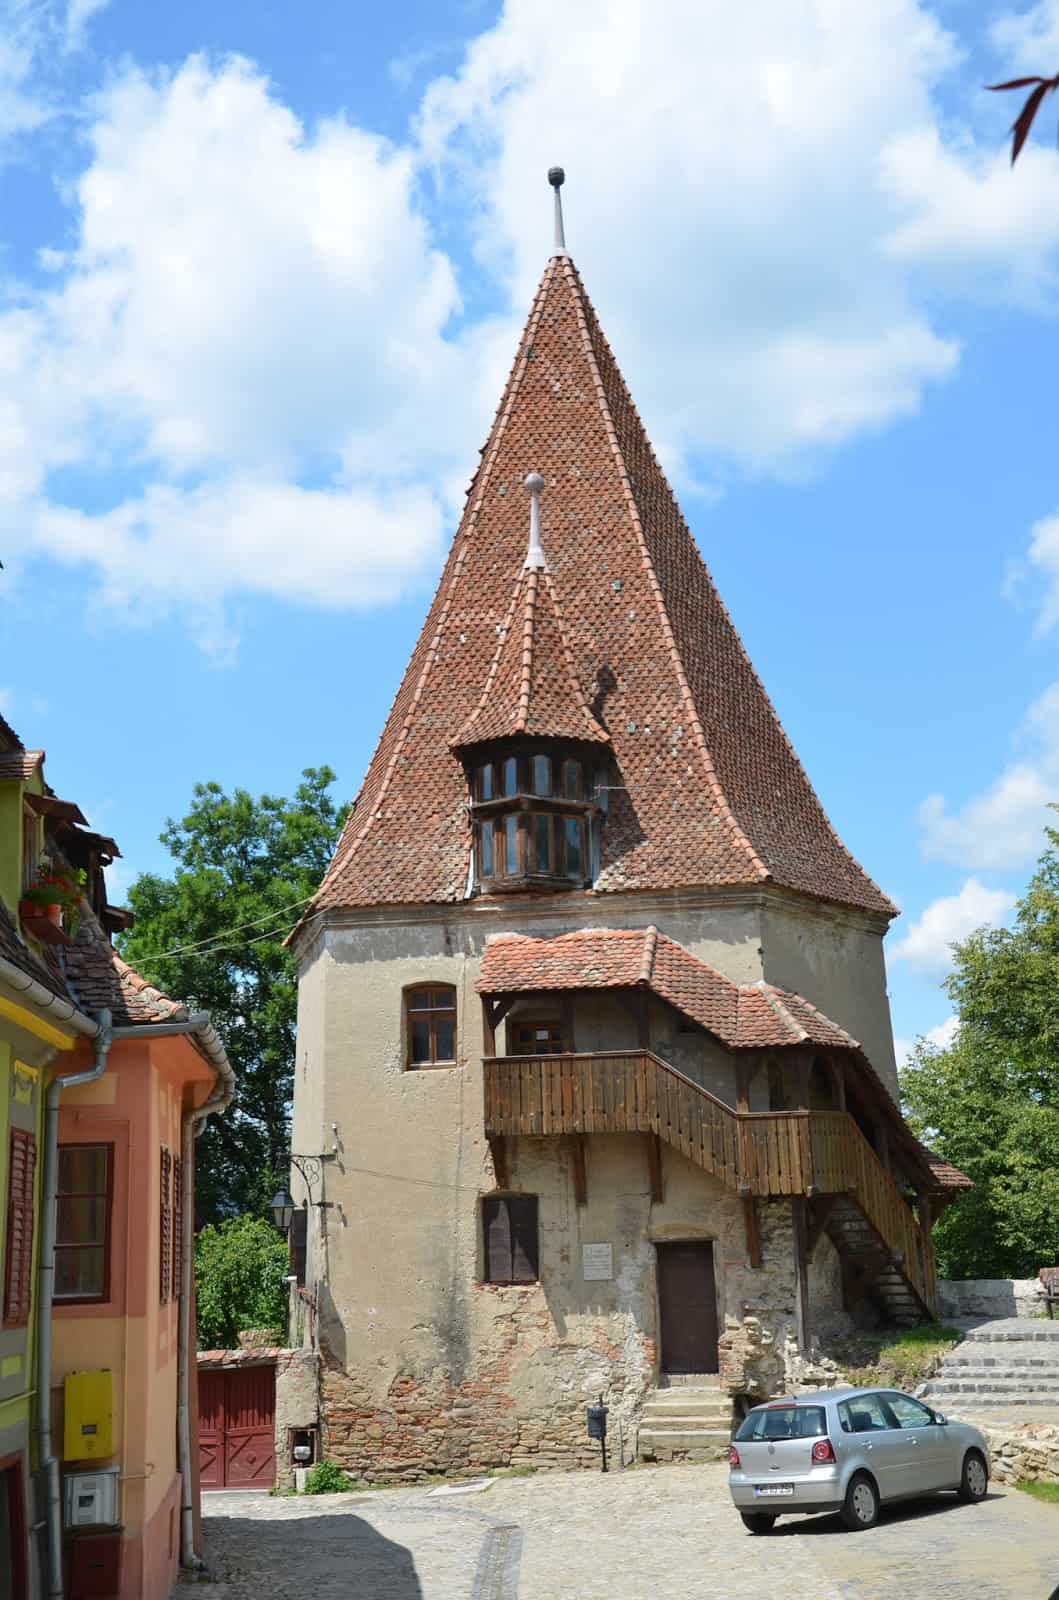 Shoemaker’s Tower in Sighişoara, Romania